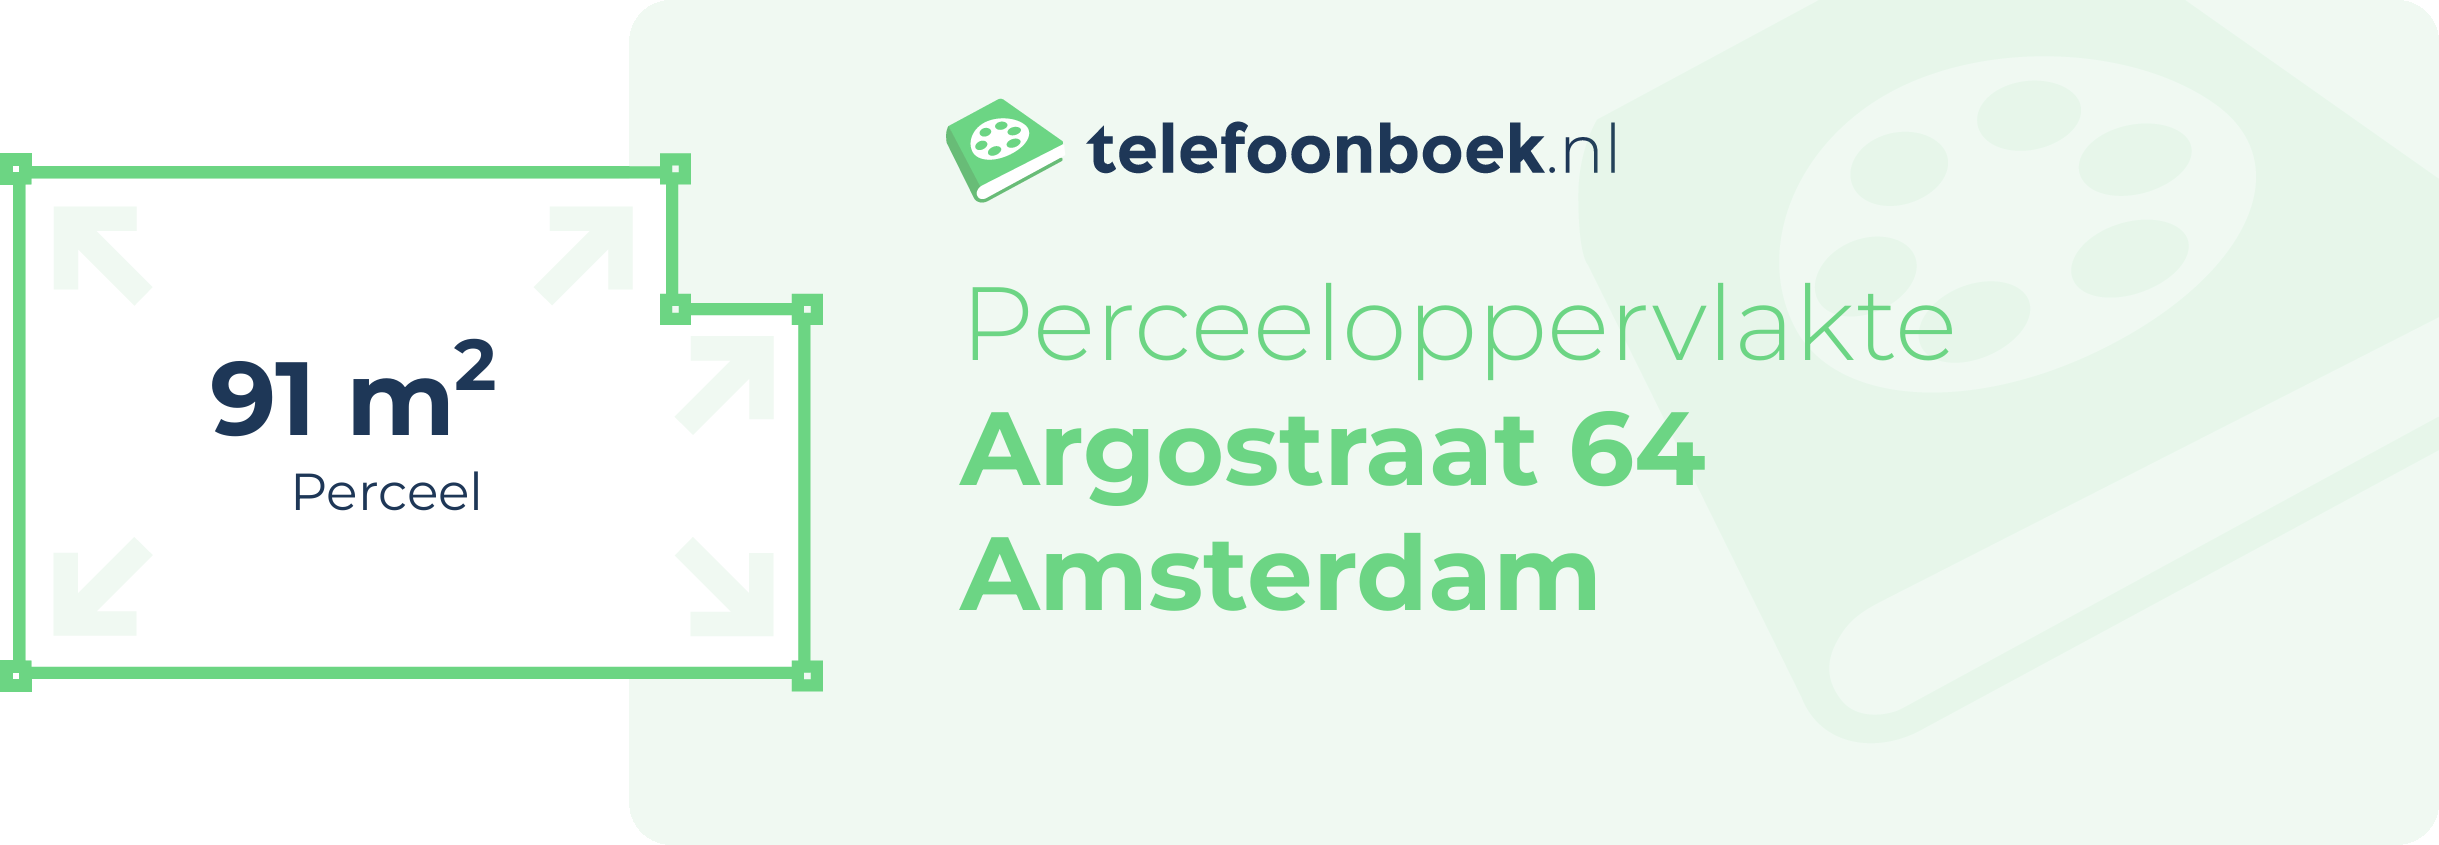 Perceeloppervlakte Argostraat 64 Amsterdam